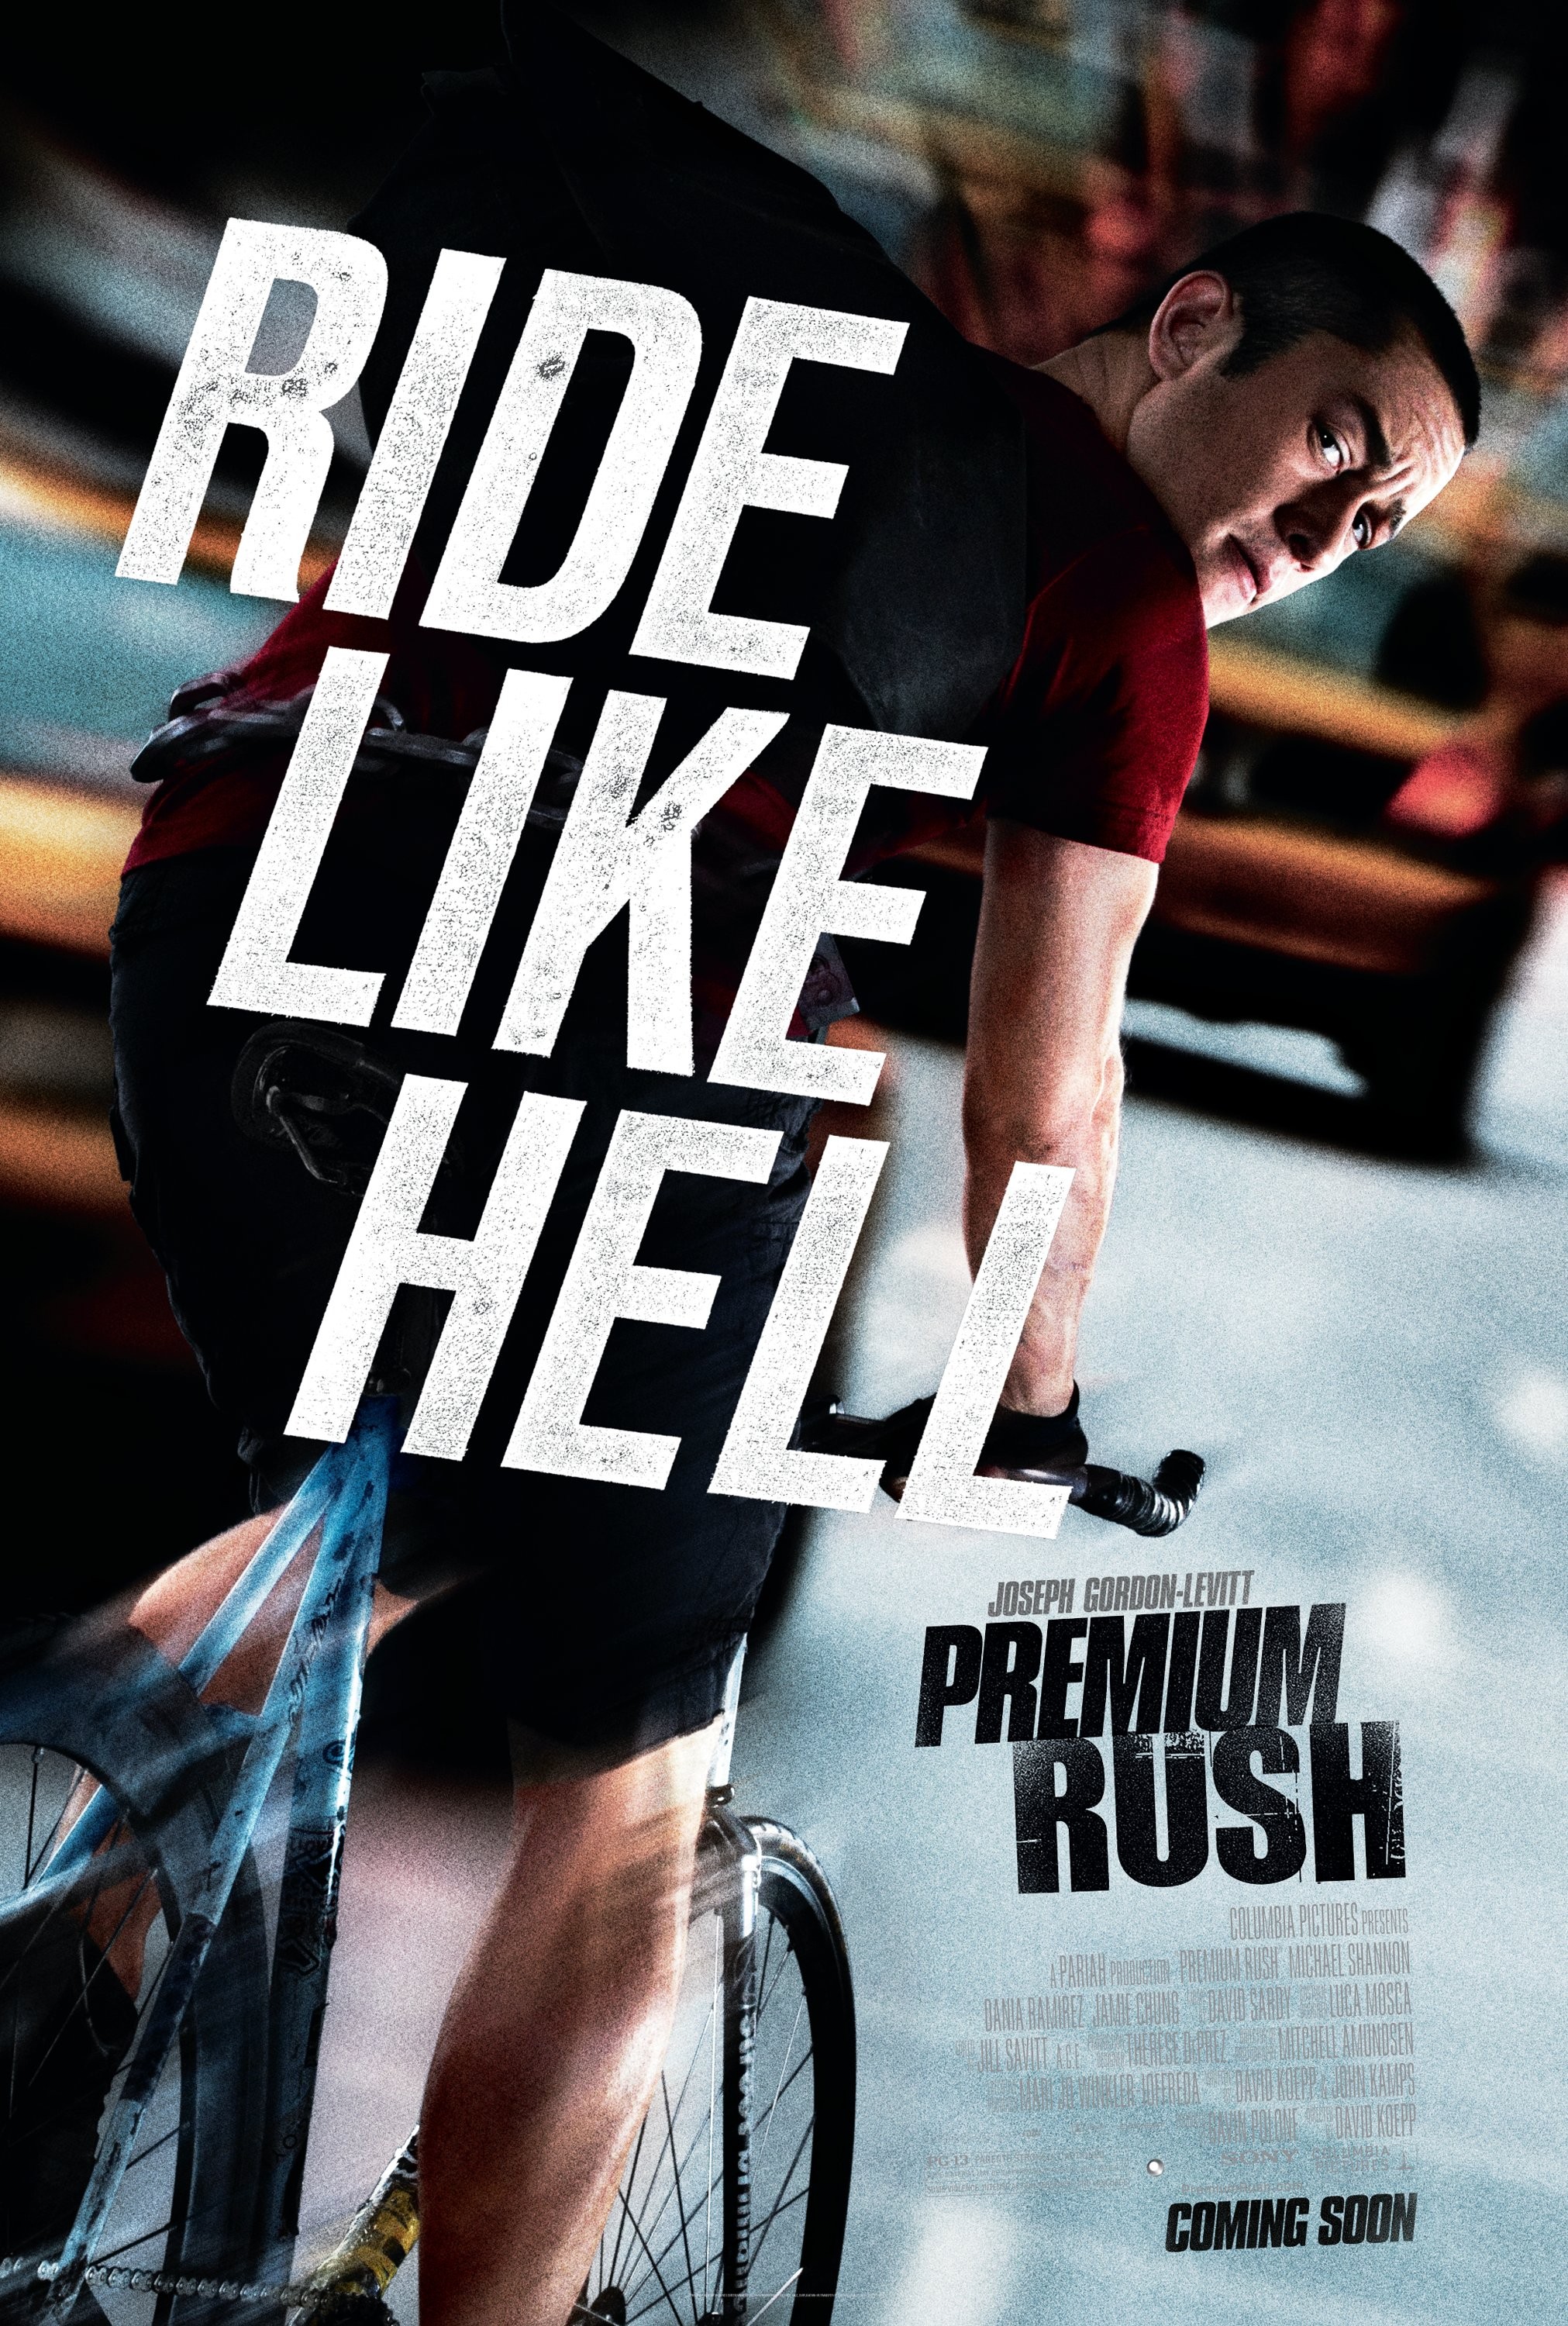 Mega Sized Movie Poster Image for Premium Rush 